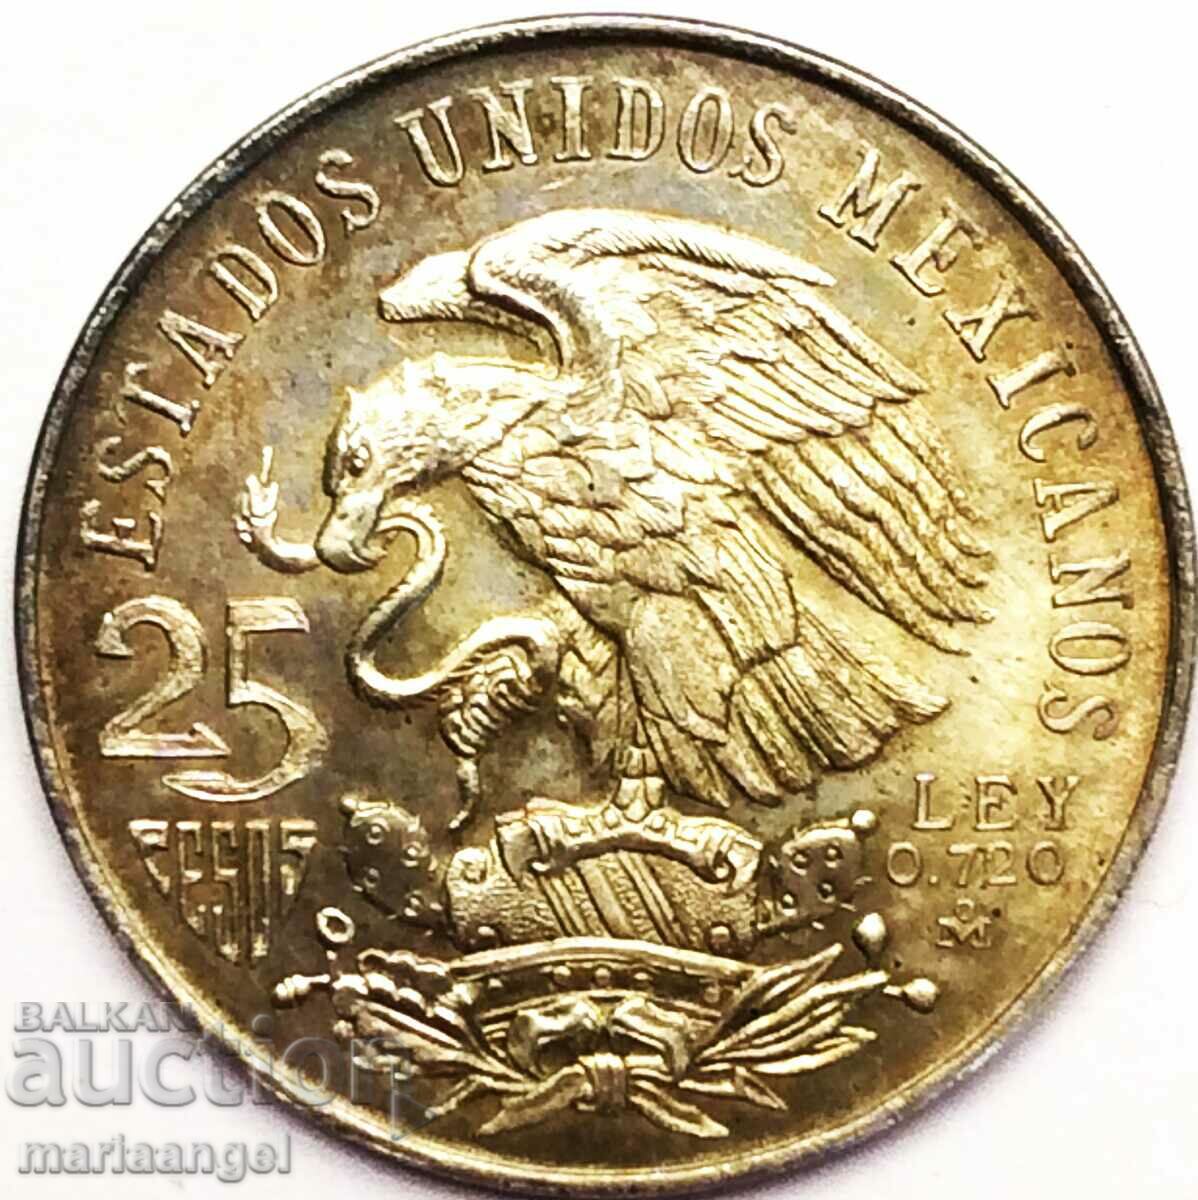 Mexico 1968 25 pesos Olympics 22.5g silver Patina